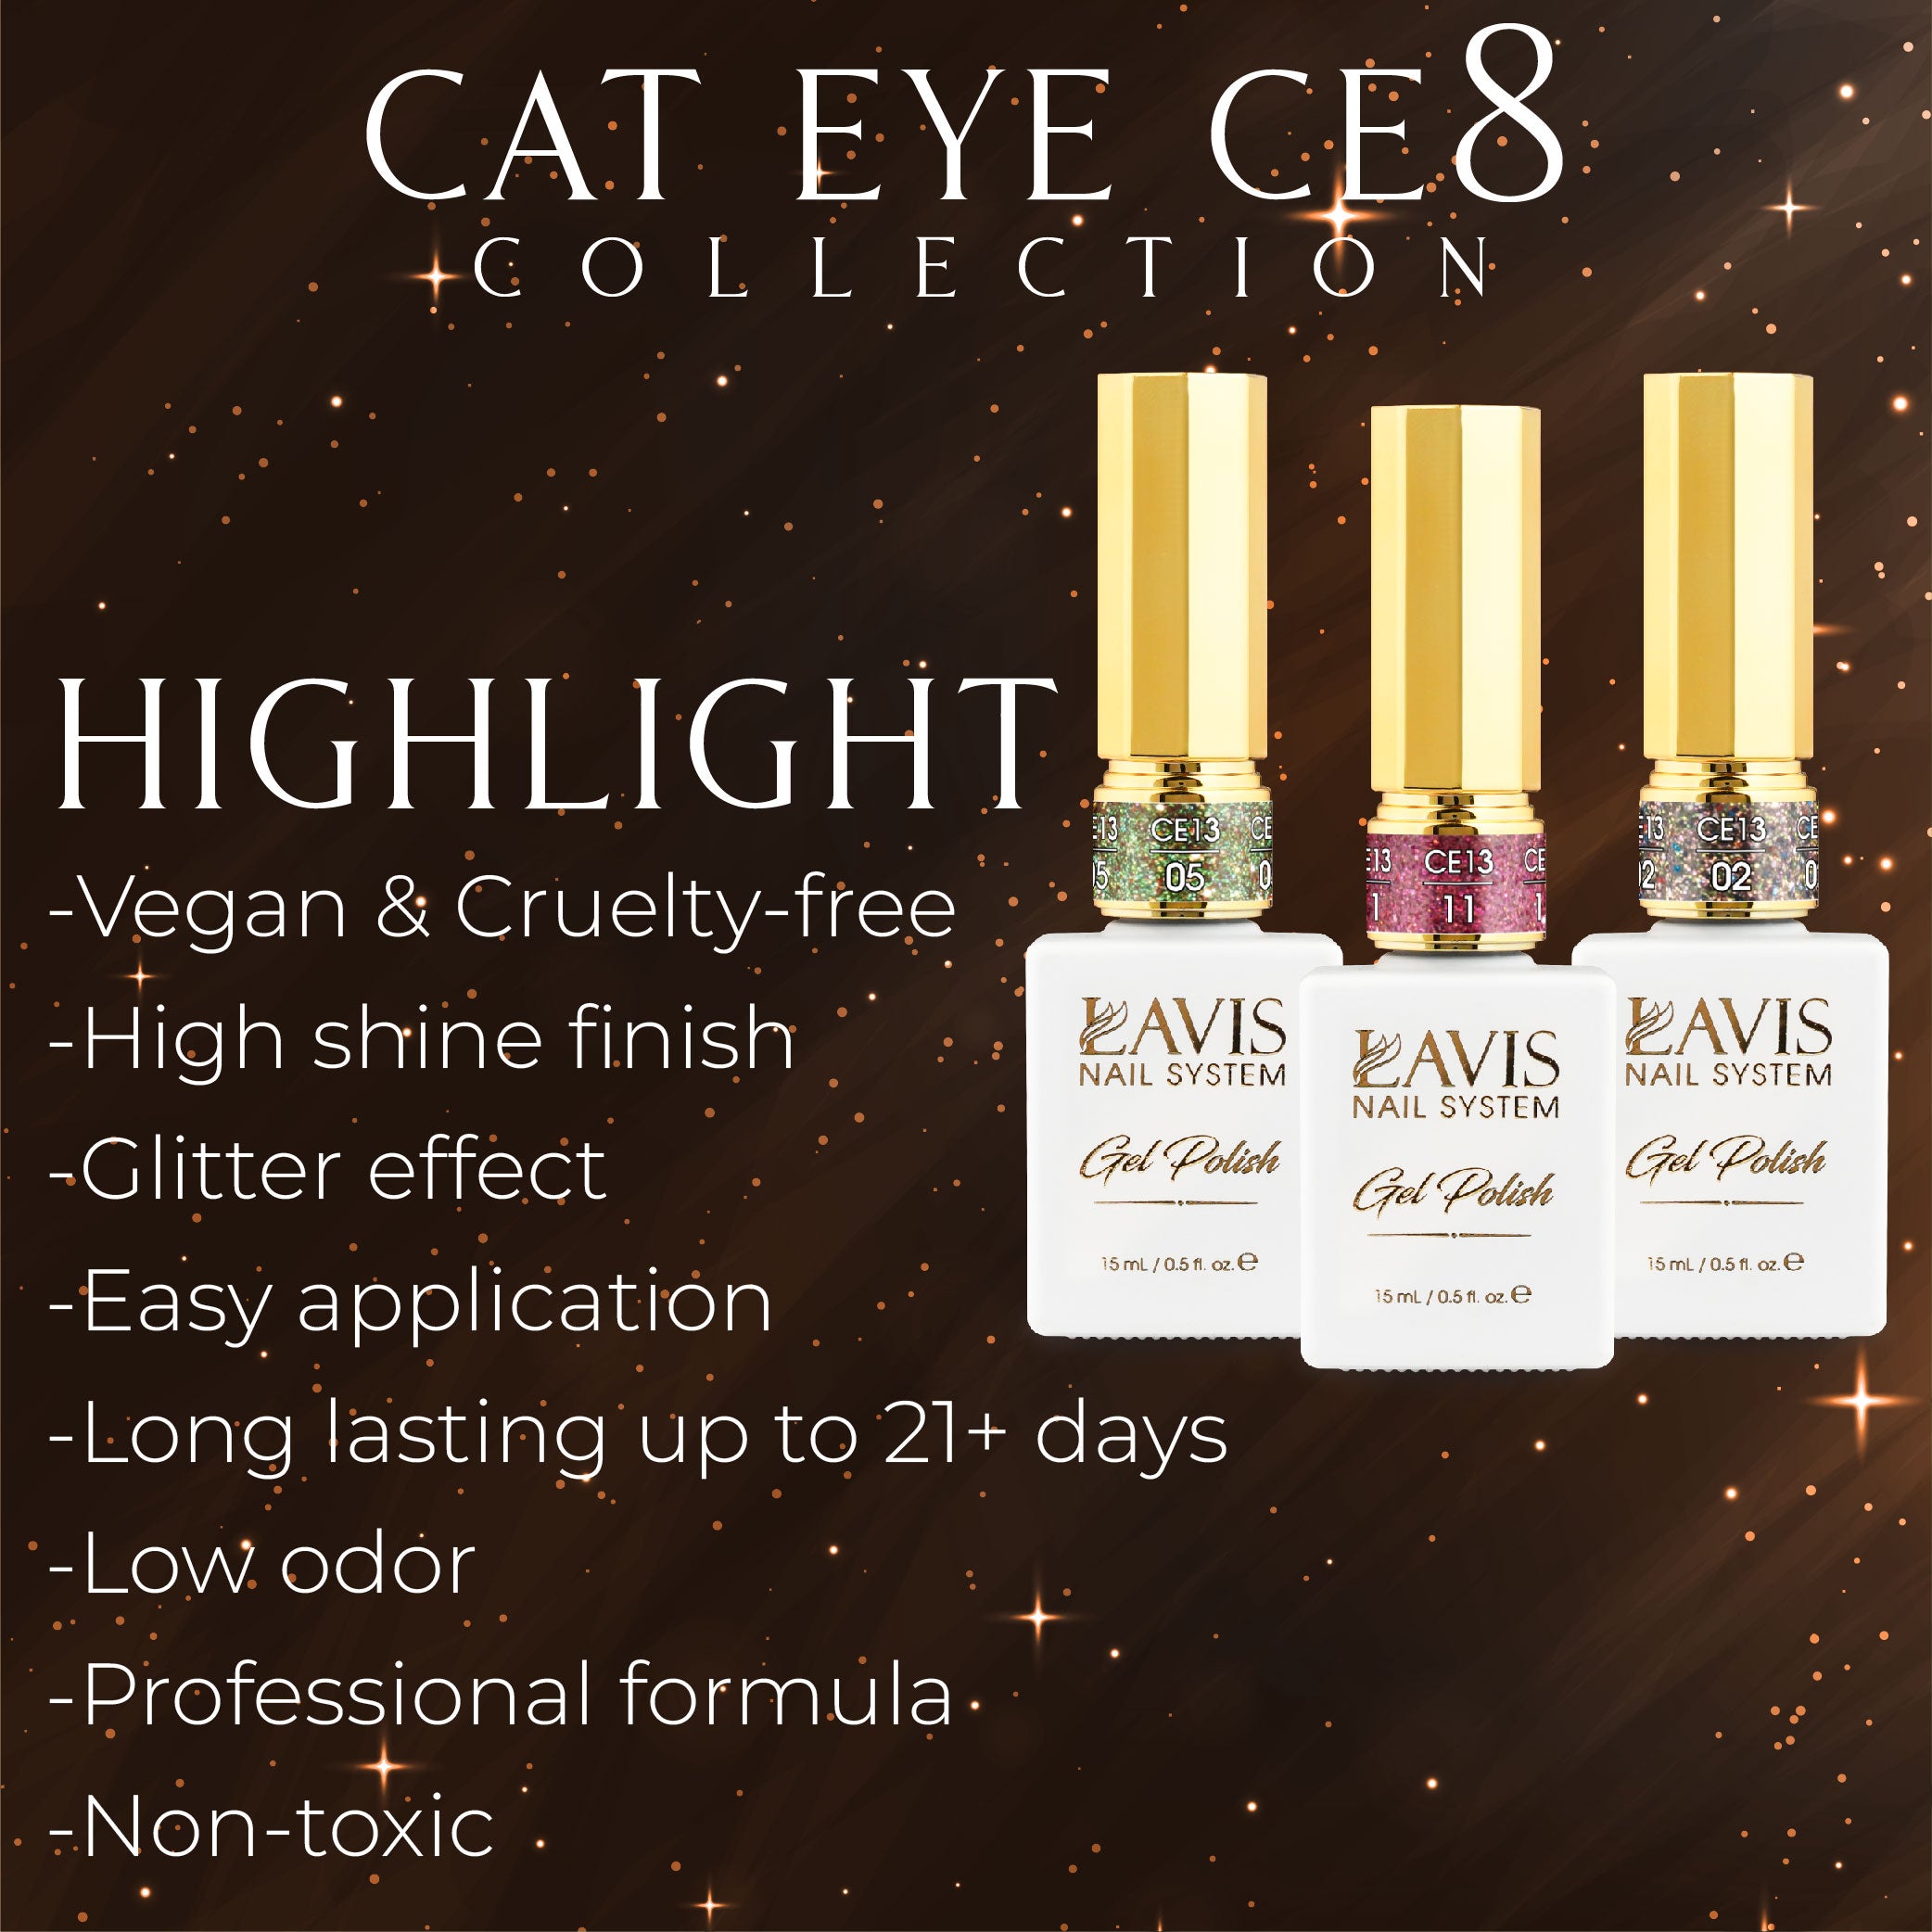 LAVIS Cat Eyes CE8 - 01 - Gel Polish 0.5 oz - Lavis Hidden Treasures Collection